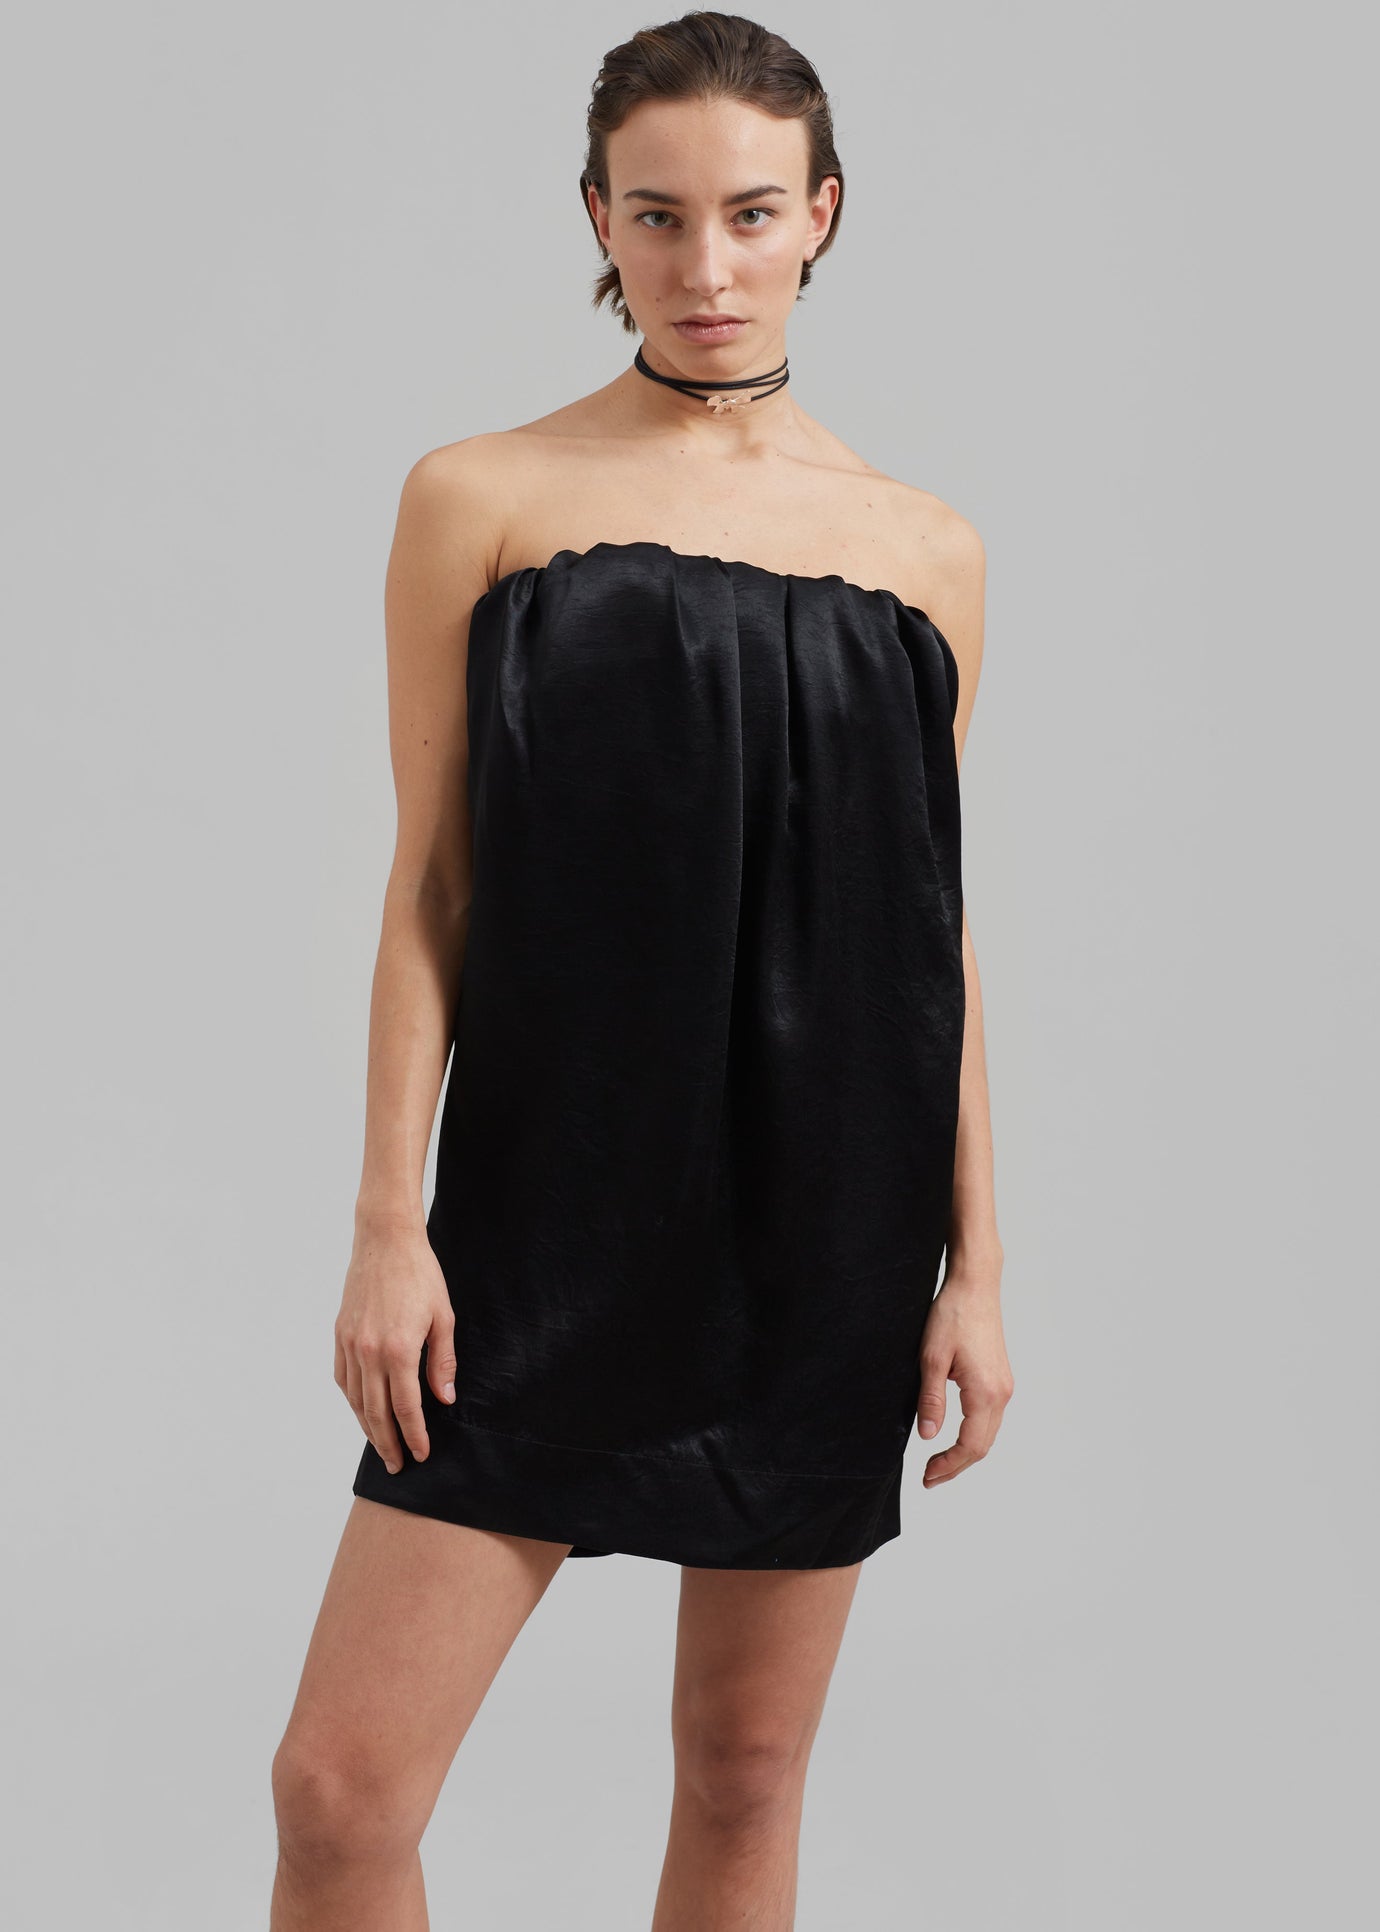 Anna October Sharon Mini Dress - Black - 1